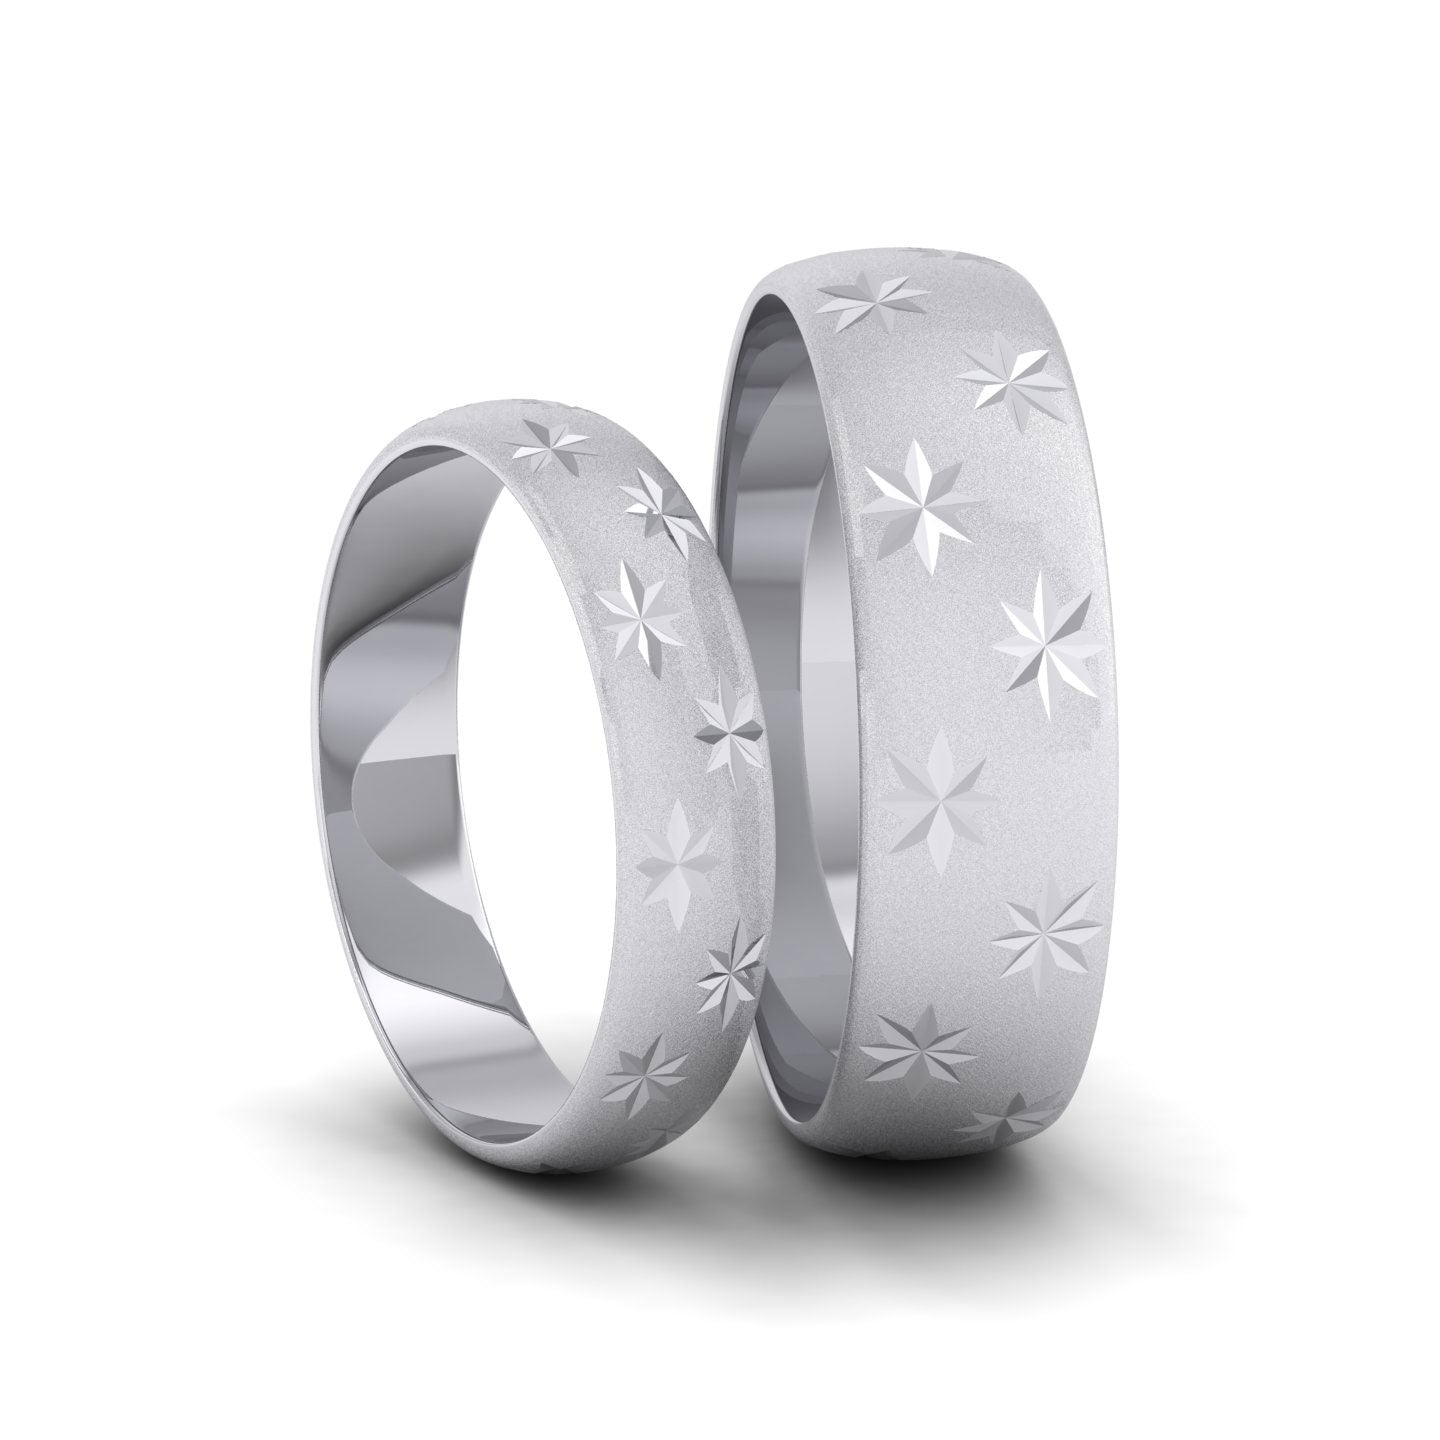 Star Patterned 950 Platinum 4mm Wedding Ring